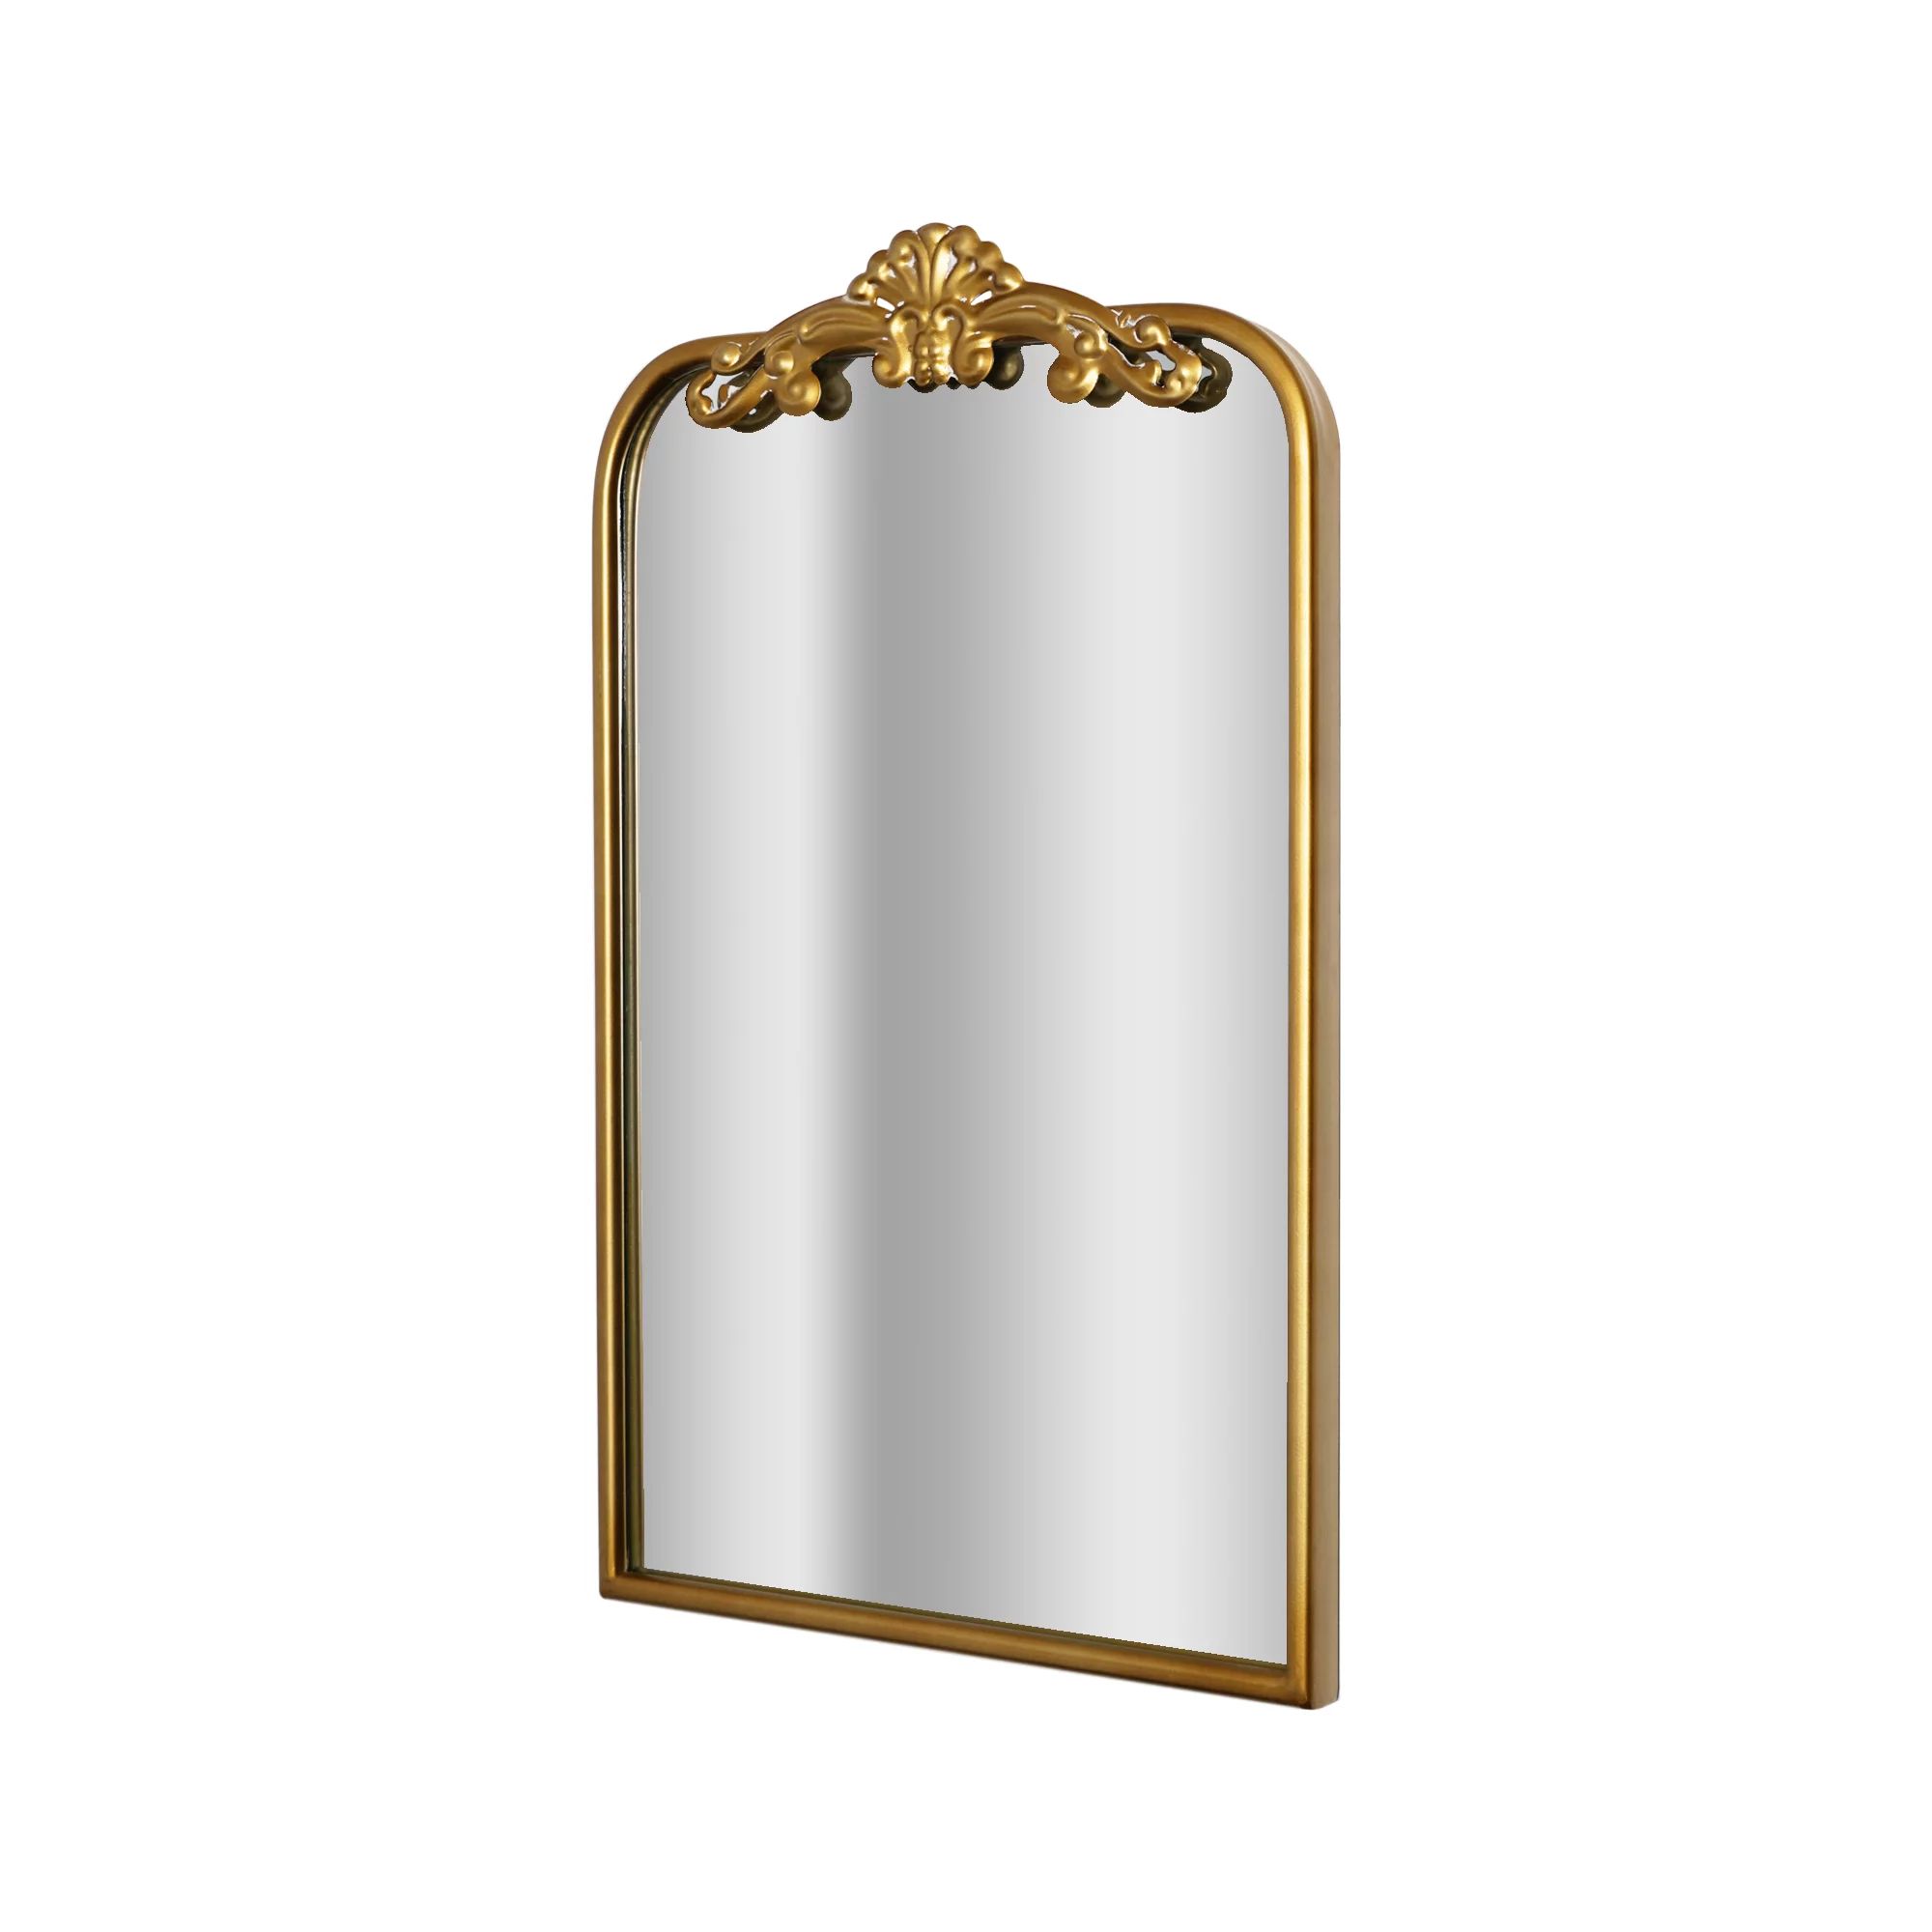 Gold Rectangle Metal Vintage-Inspired Ornate Decorative Vanity Wall Mirror - 14" x 24" x 1.25" | Walmart (US)